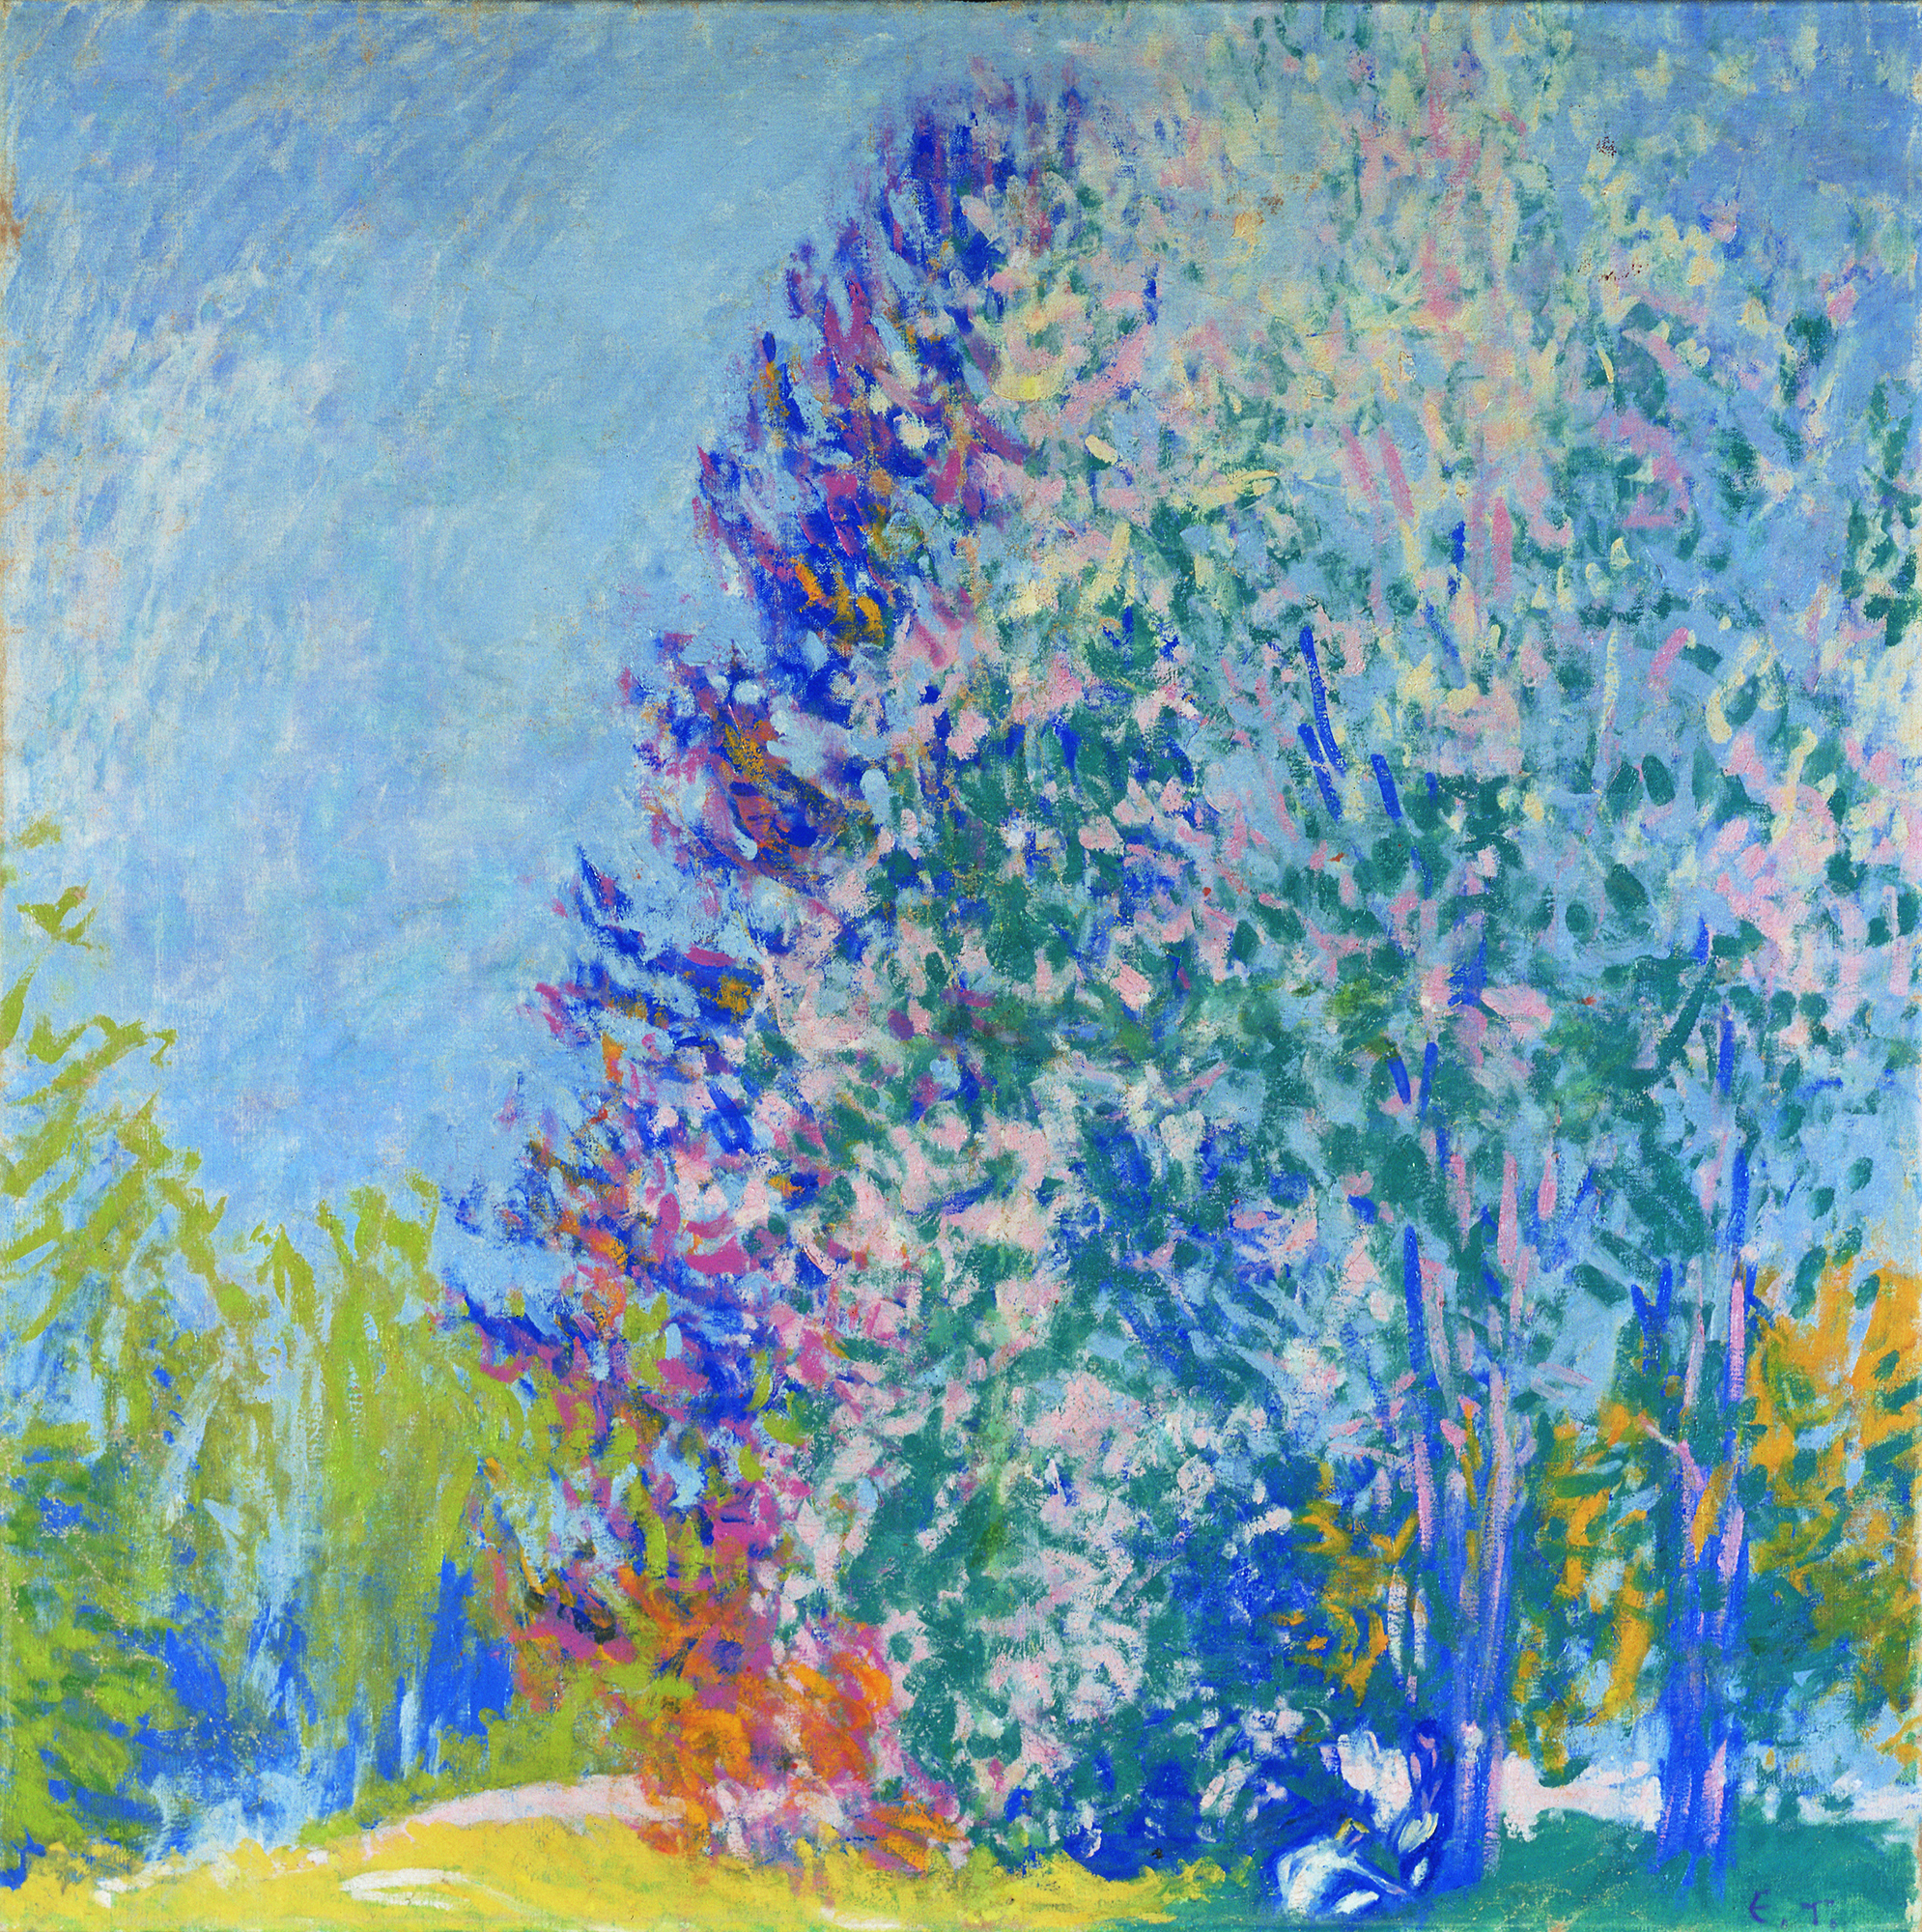 värikäs maalaus suuresta puussa, jonka varjossa istuu ihmisiä